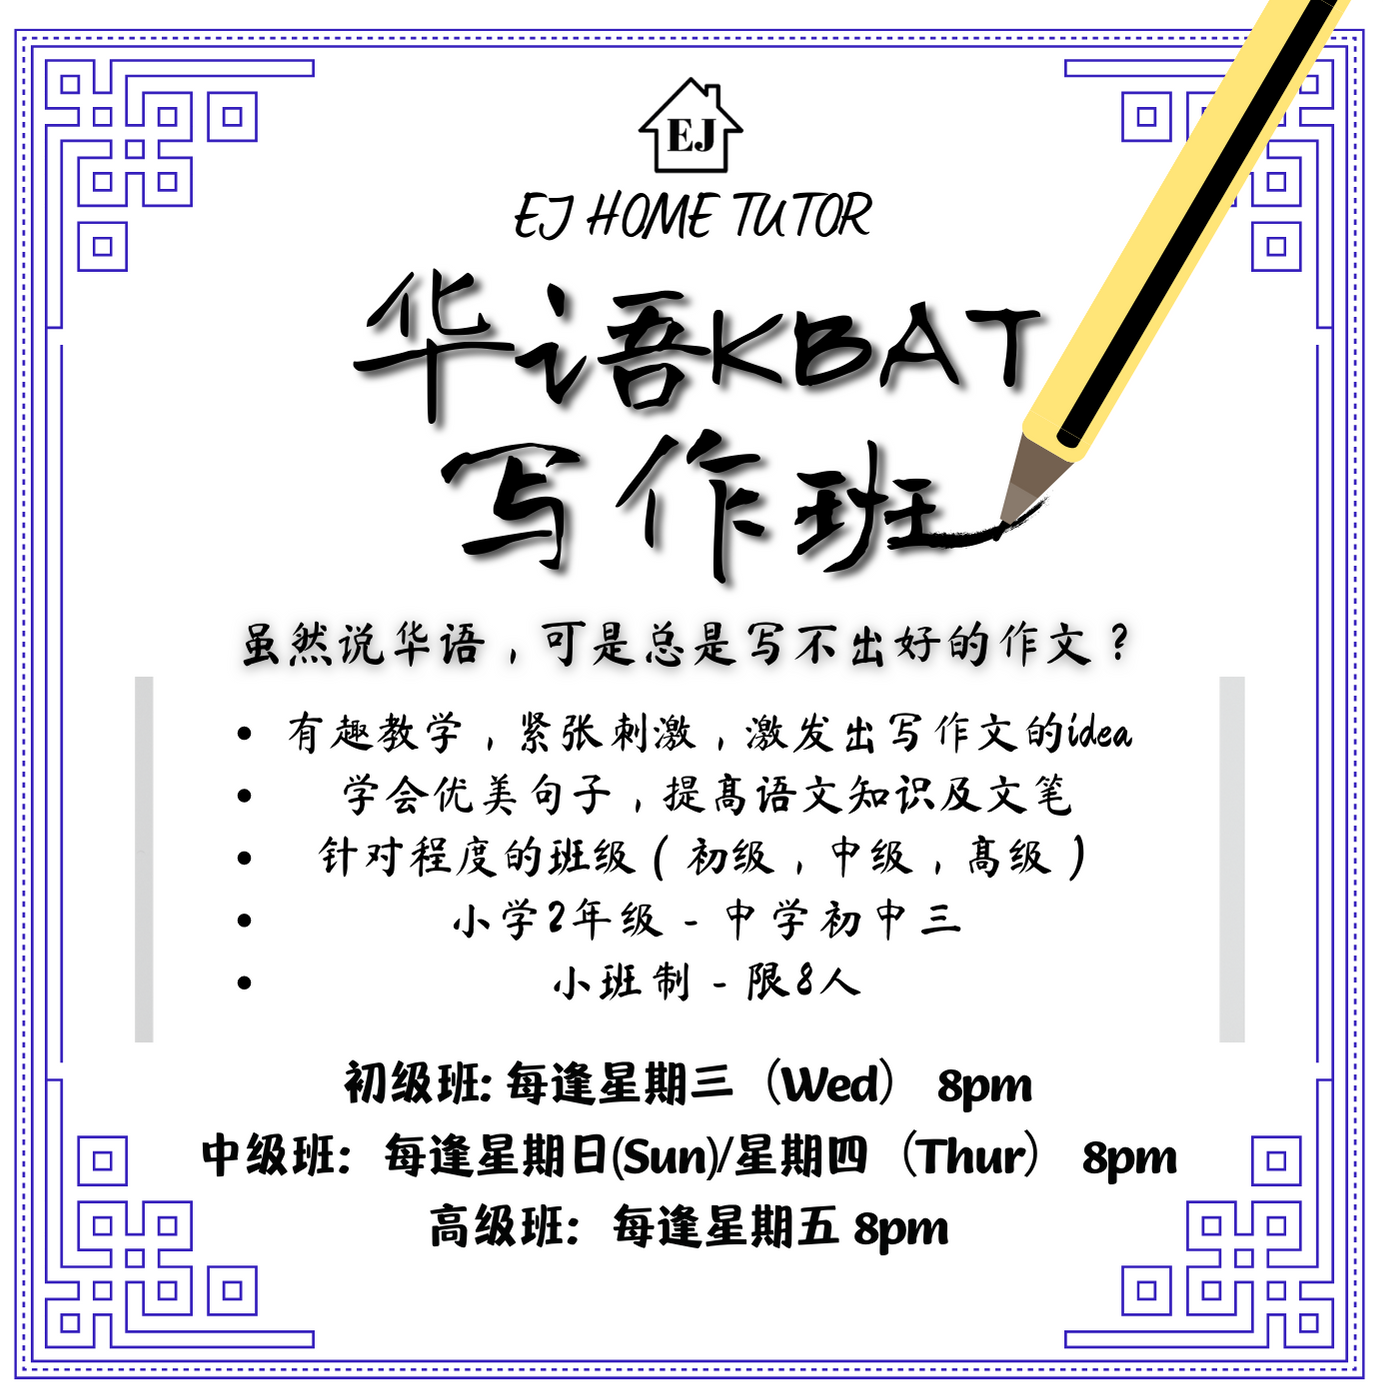 KBAT Writing Class（BC) 华语写作班